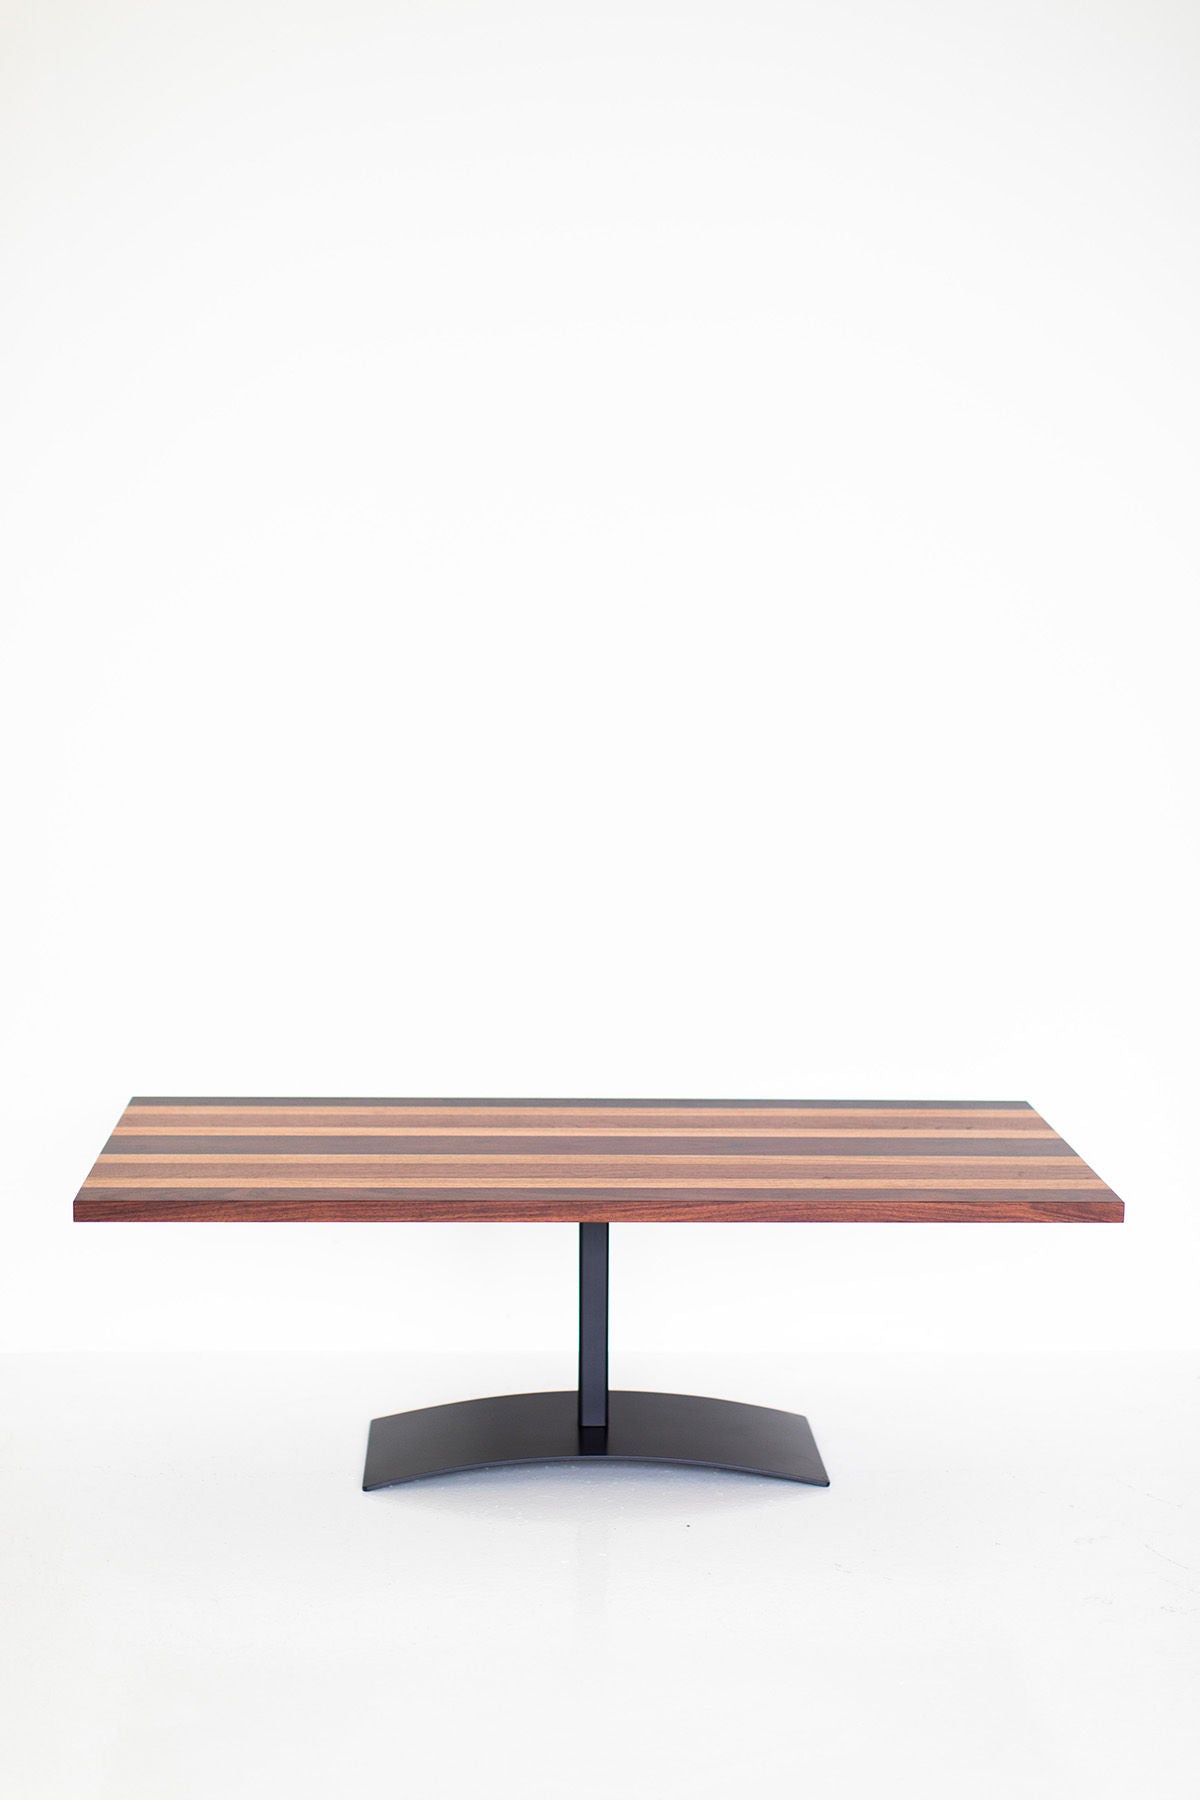 Milo Baughman Striped Top Coffee Table 393S 05